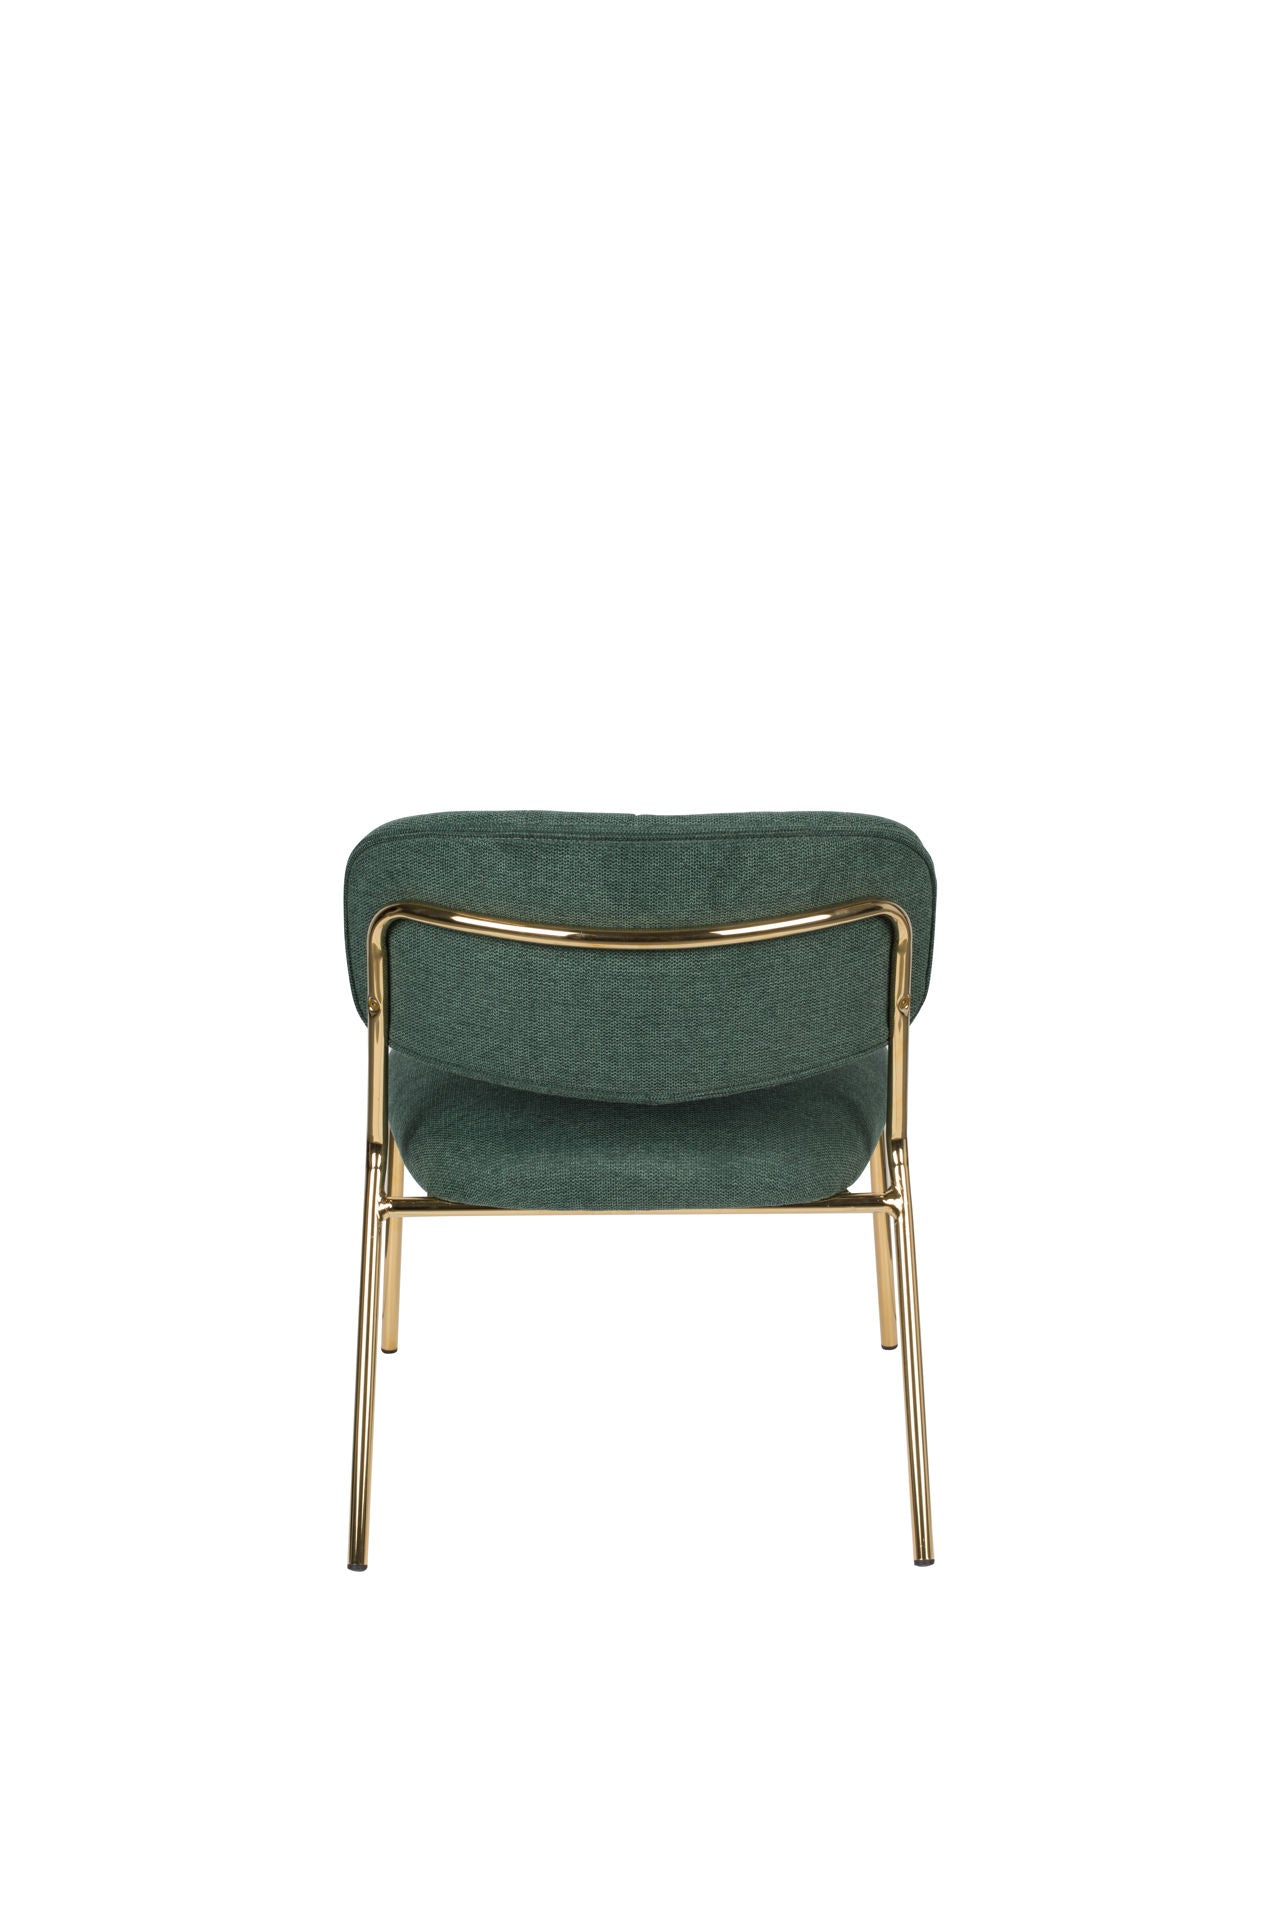 Nancy's Lake Los Angeles Lounge Chair - Industrieel -Donkergroen - Polyester, Multiplex, Staal - 60 cm x 56 cm x 68 cm